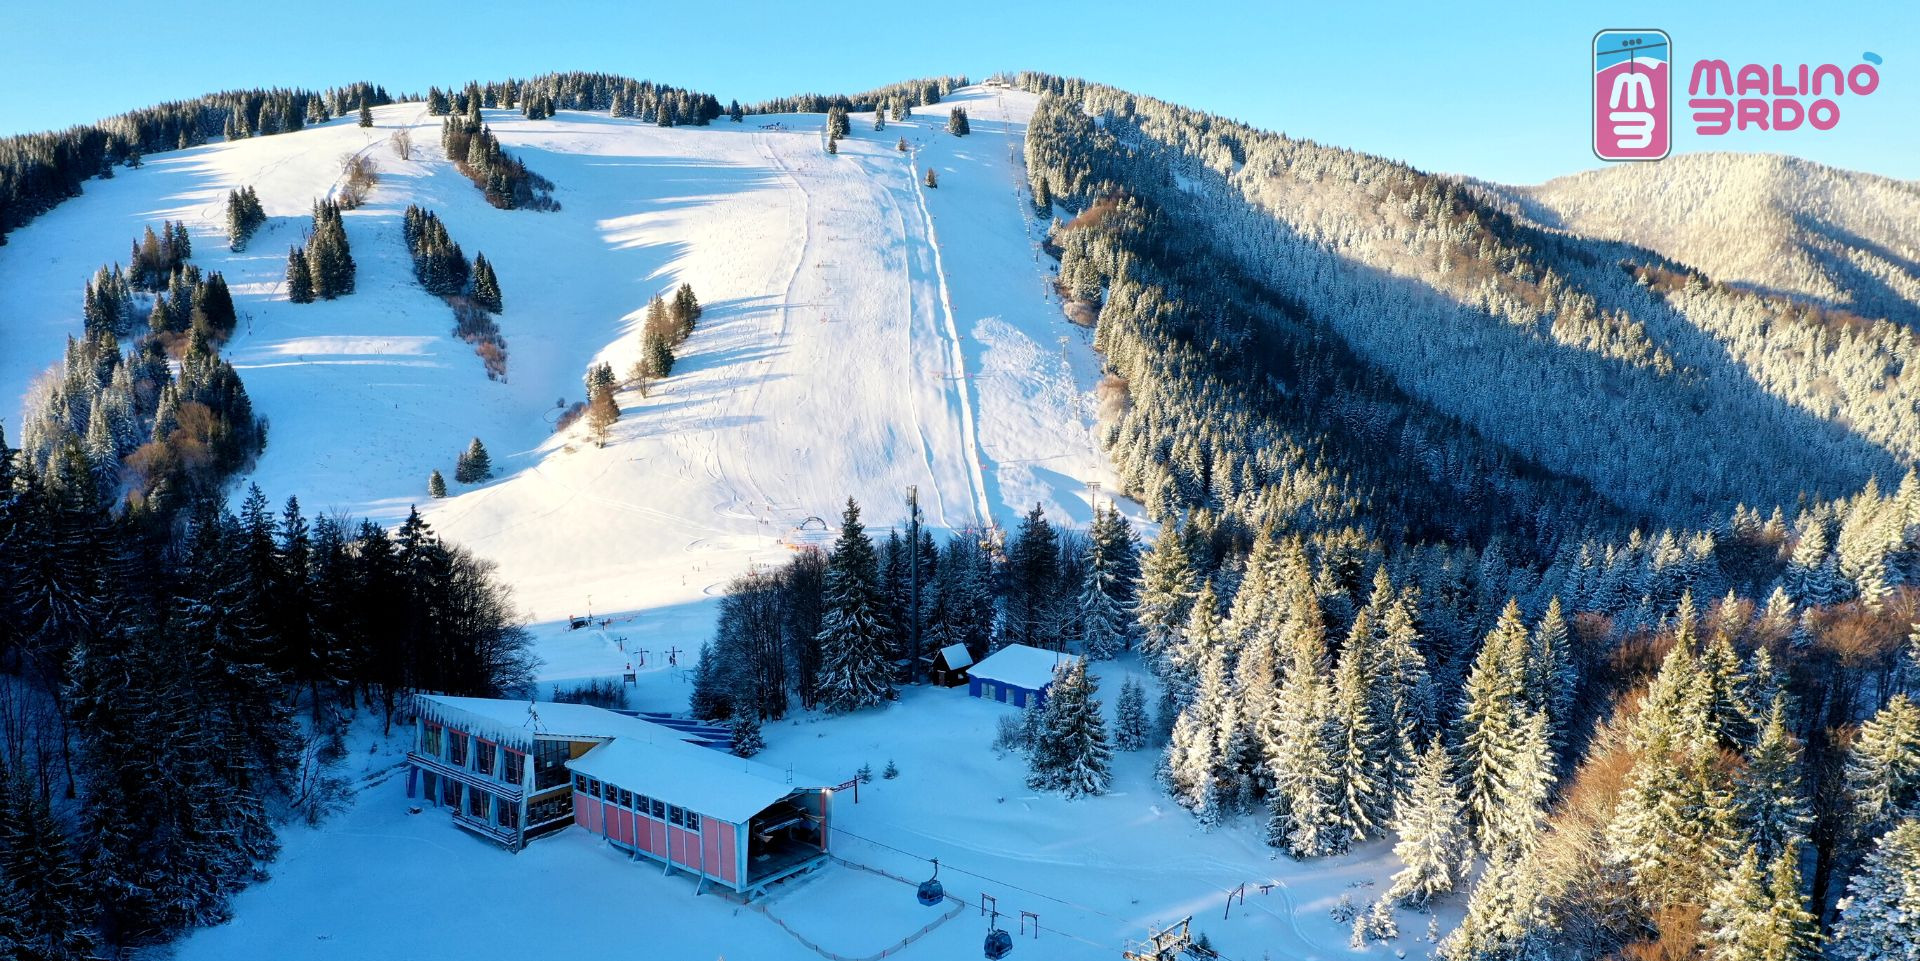 JUNIOR tariff for daily ski passes in winter